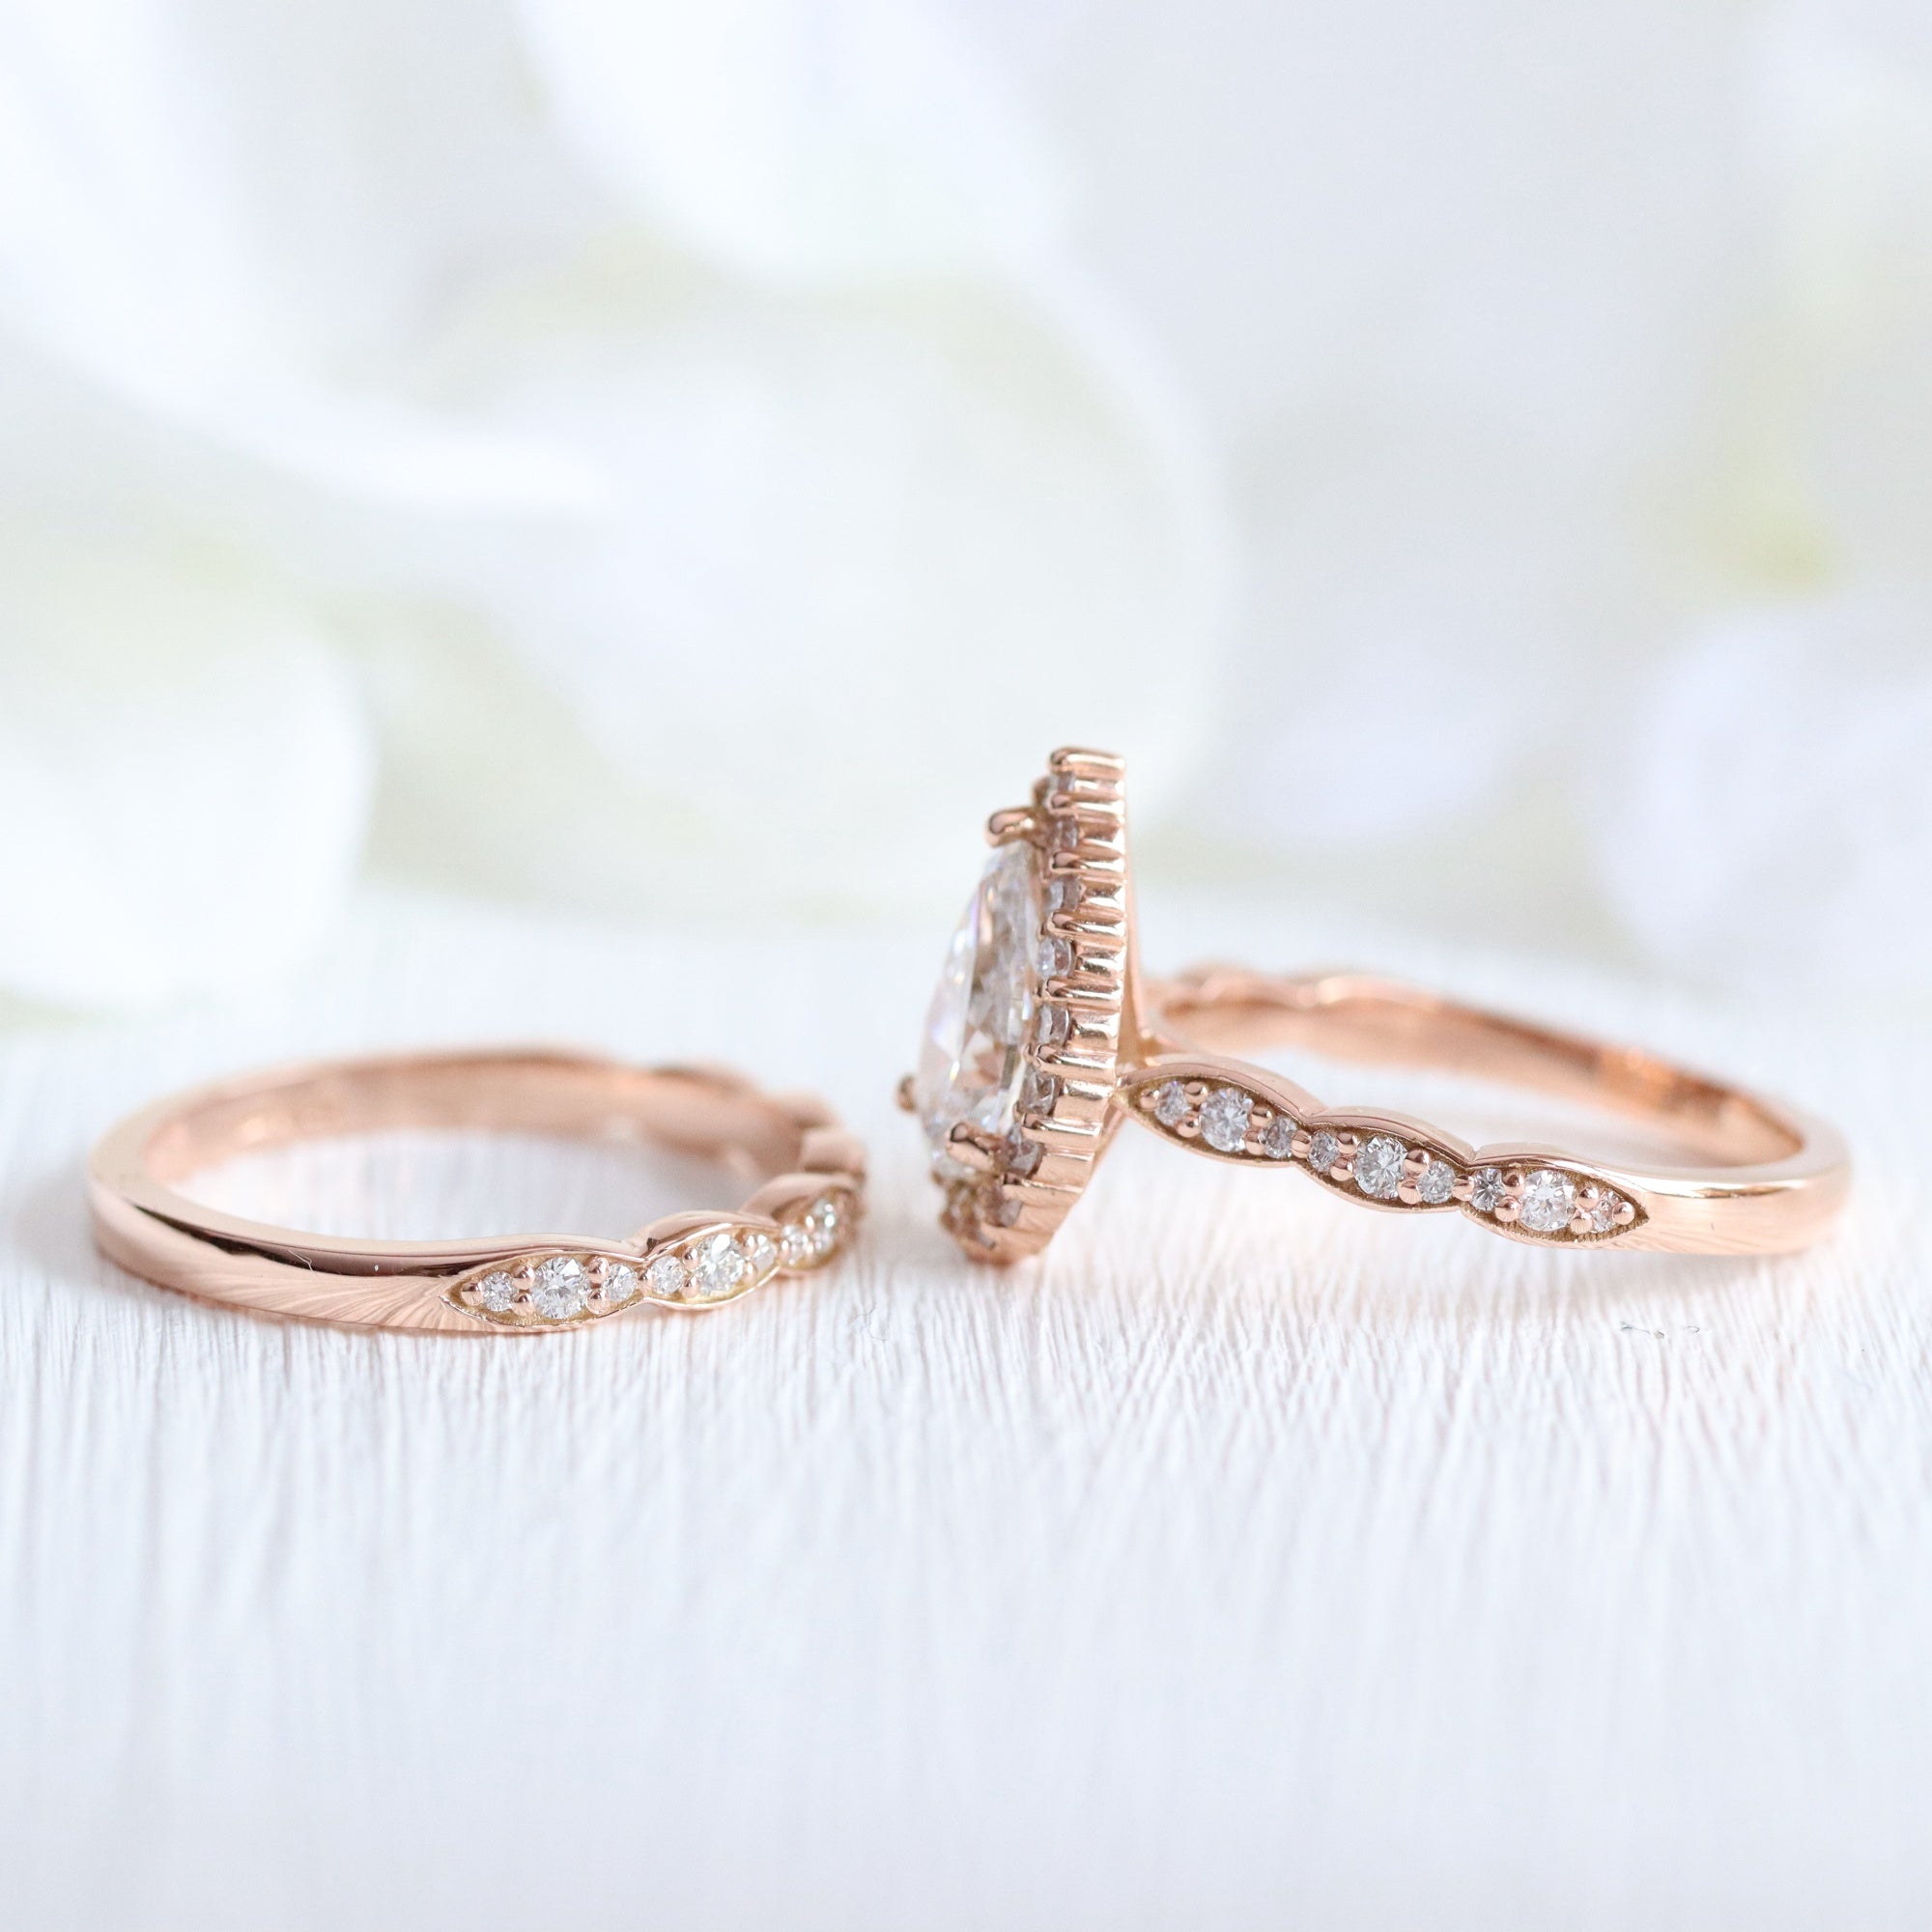 2 Ct Pear Lab Diamond Ring Stack Rose Gold Halo Pave Ring Bridal Set